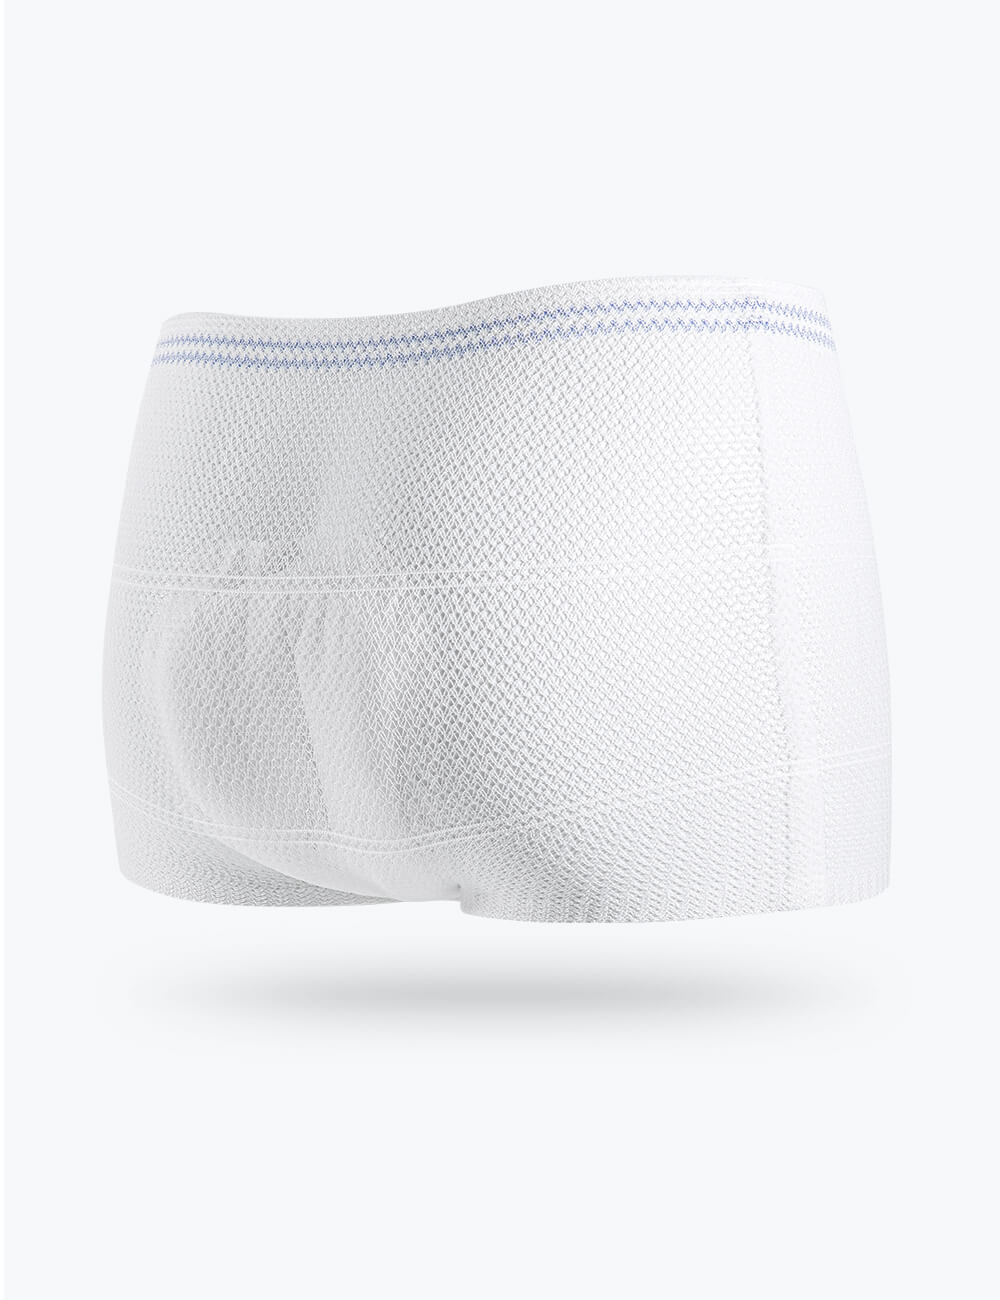 Mesh Underwear Postpartum 10 Pack Disposable Mesh Panties Hospital Postpartum  Underwear S-2xl